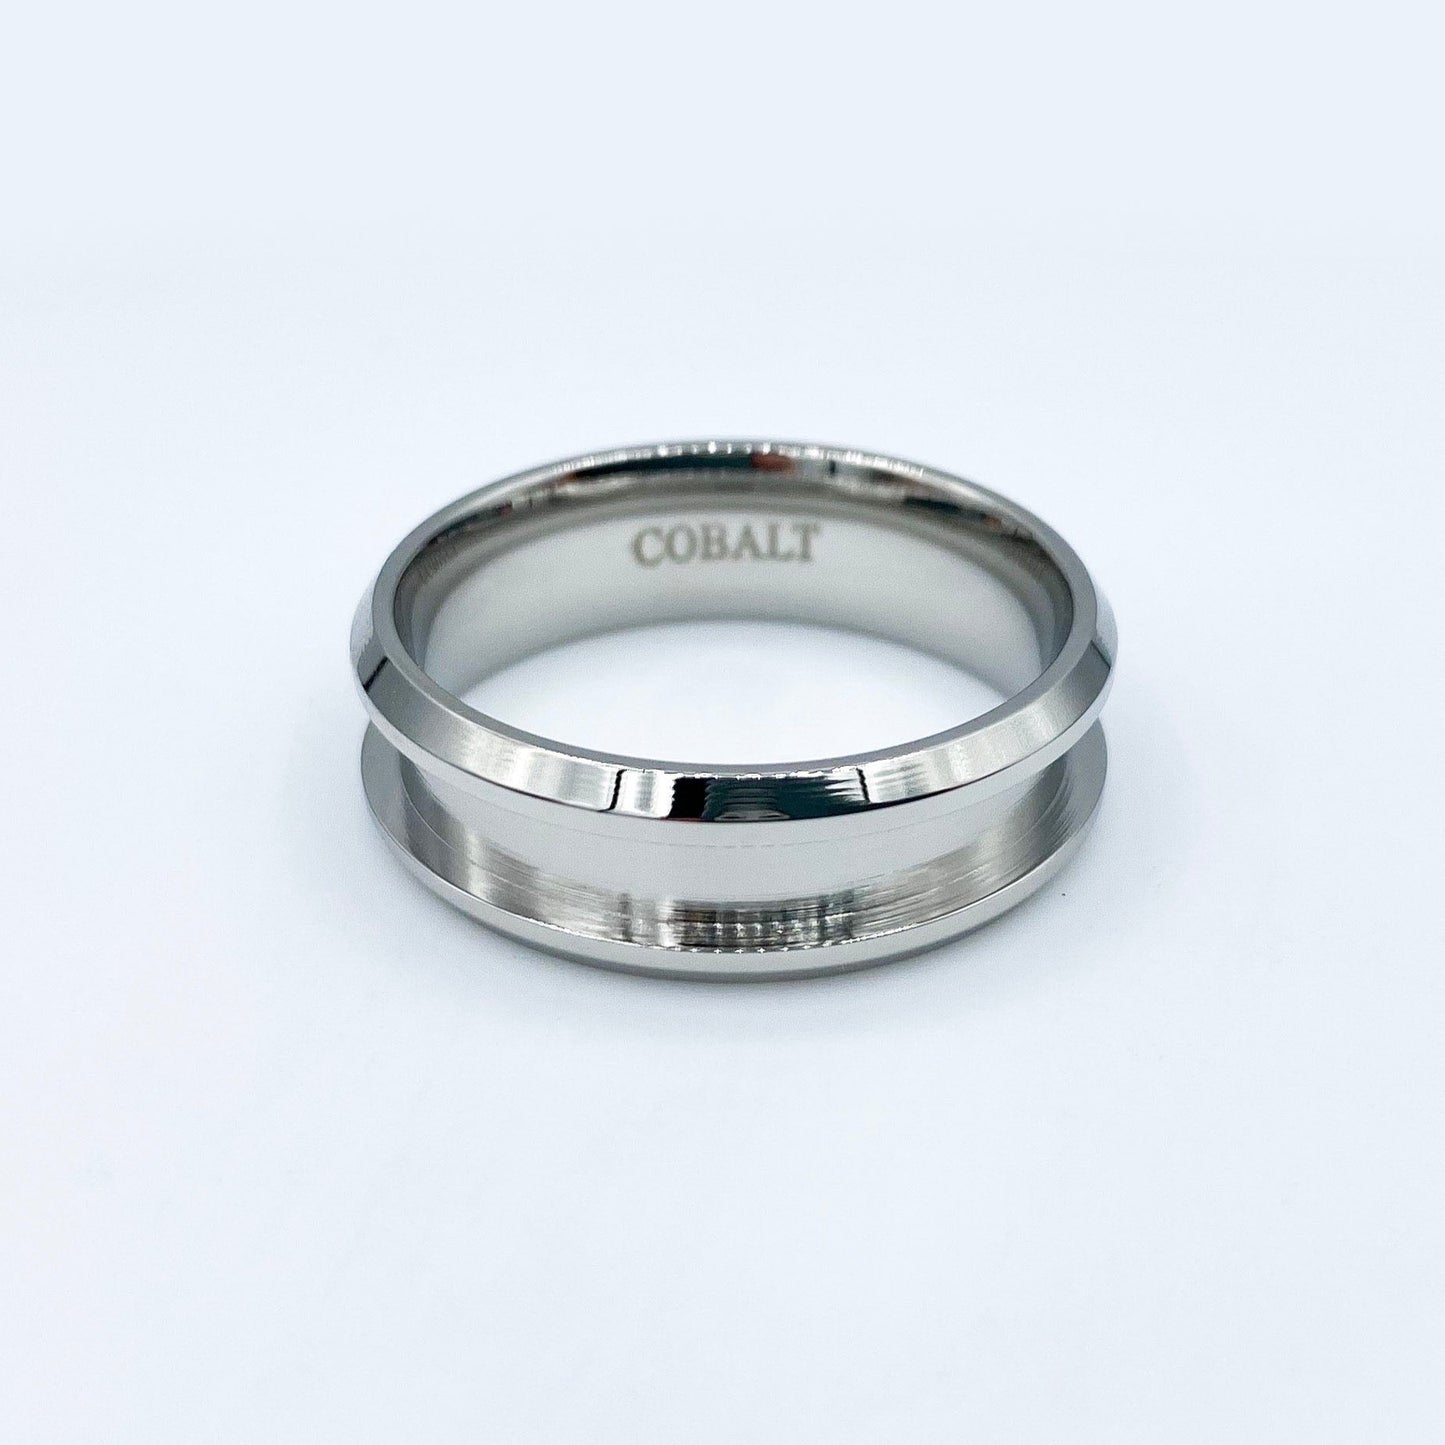 Cobalt Chrome Ring Blank - Patrick Adair Supplies